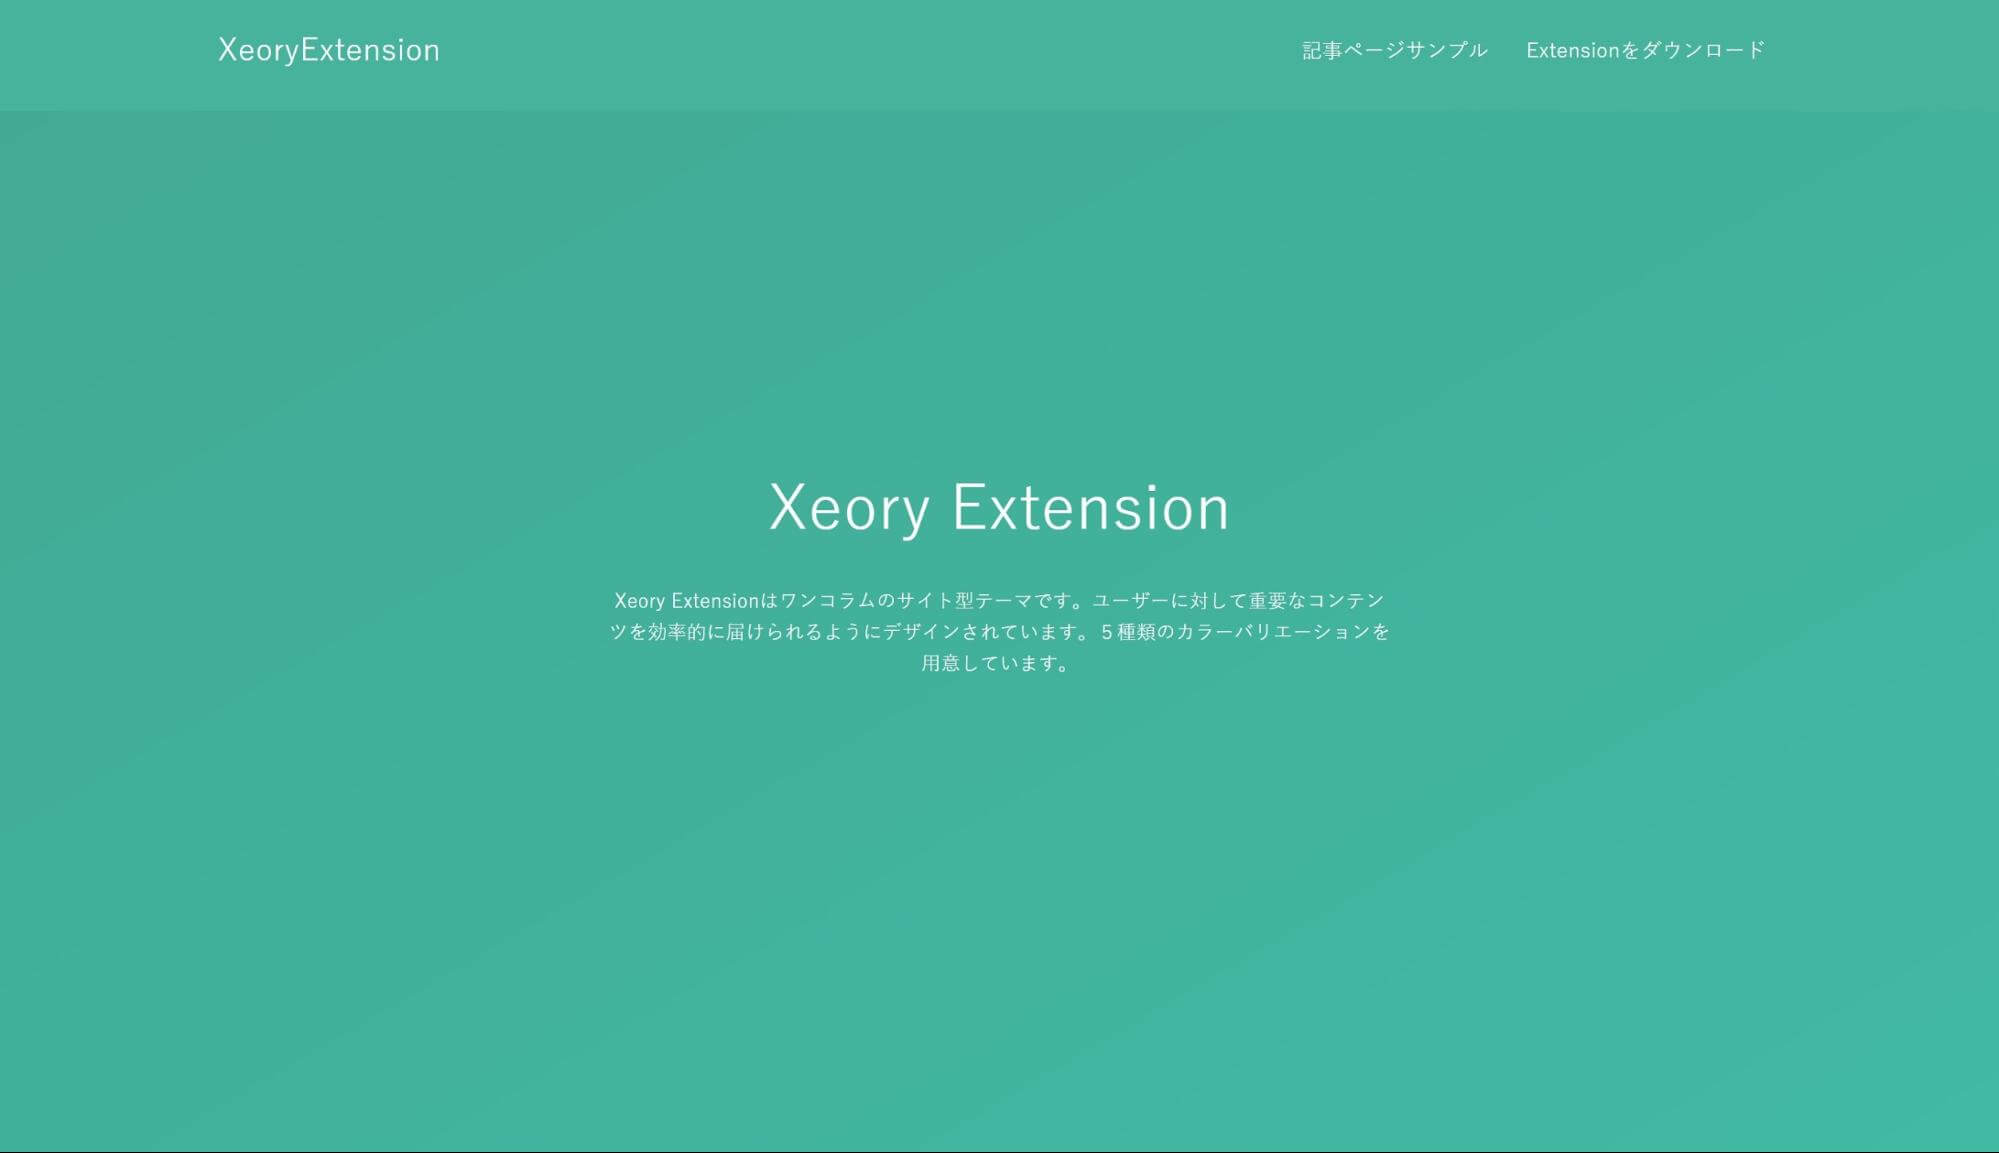 ▲Xeory Extensionのデモサイトトップページ